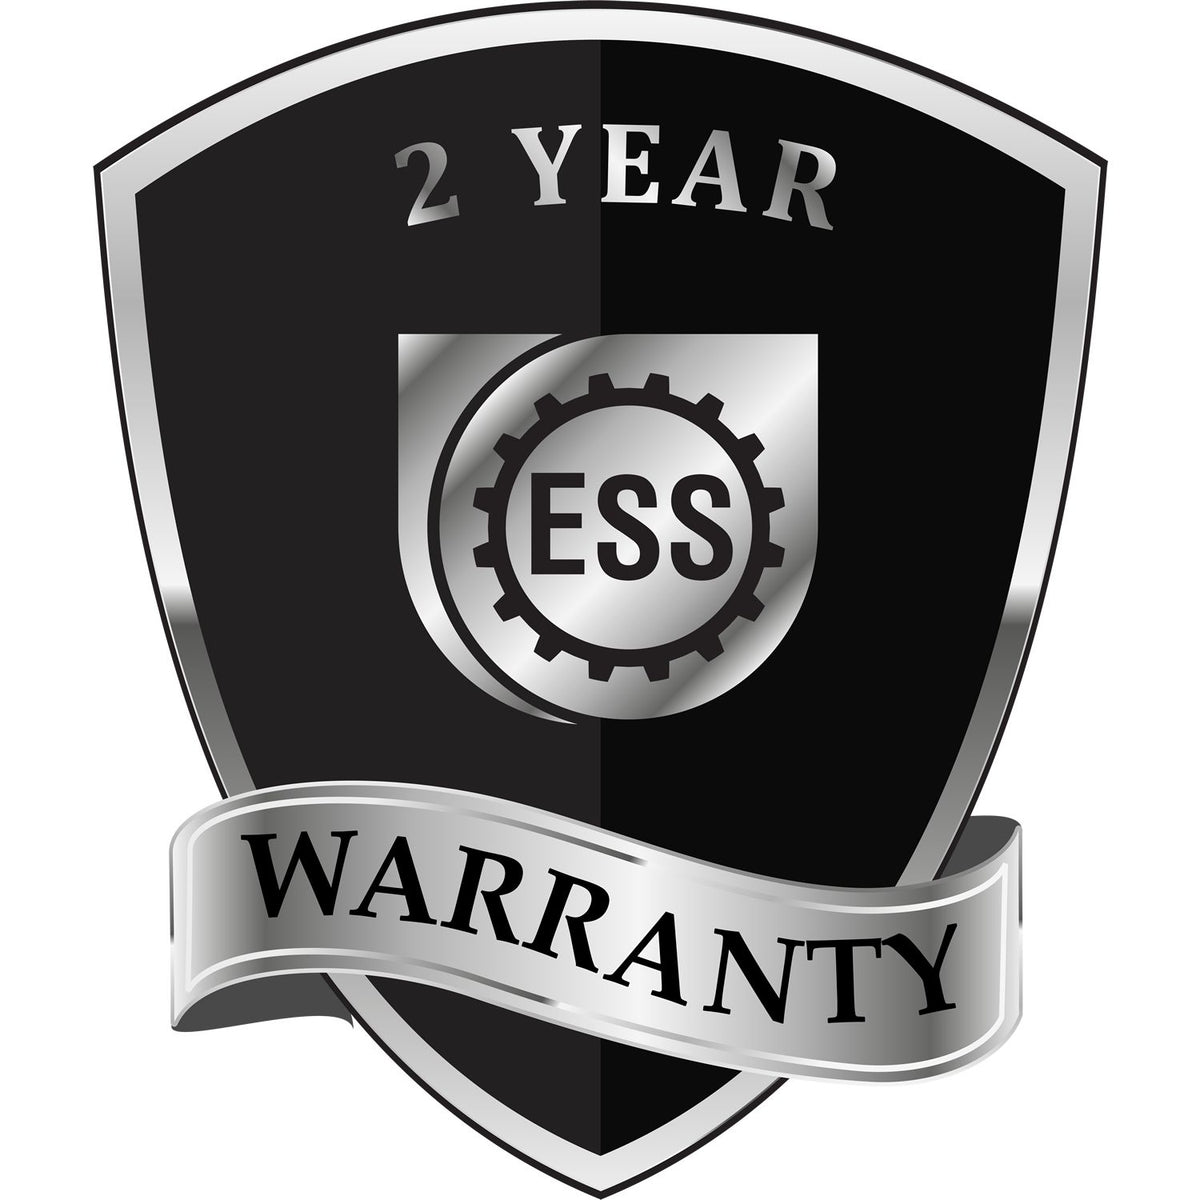 A black and silver badge or emblem showing warranty information for the Gift Minnesota Land Surveyor Seal